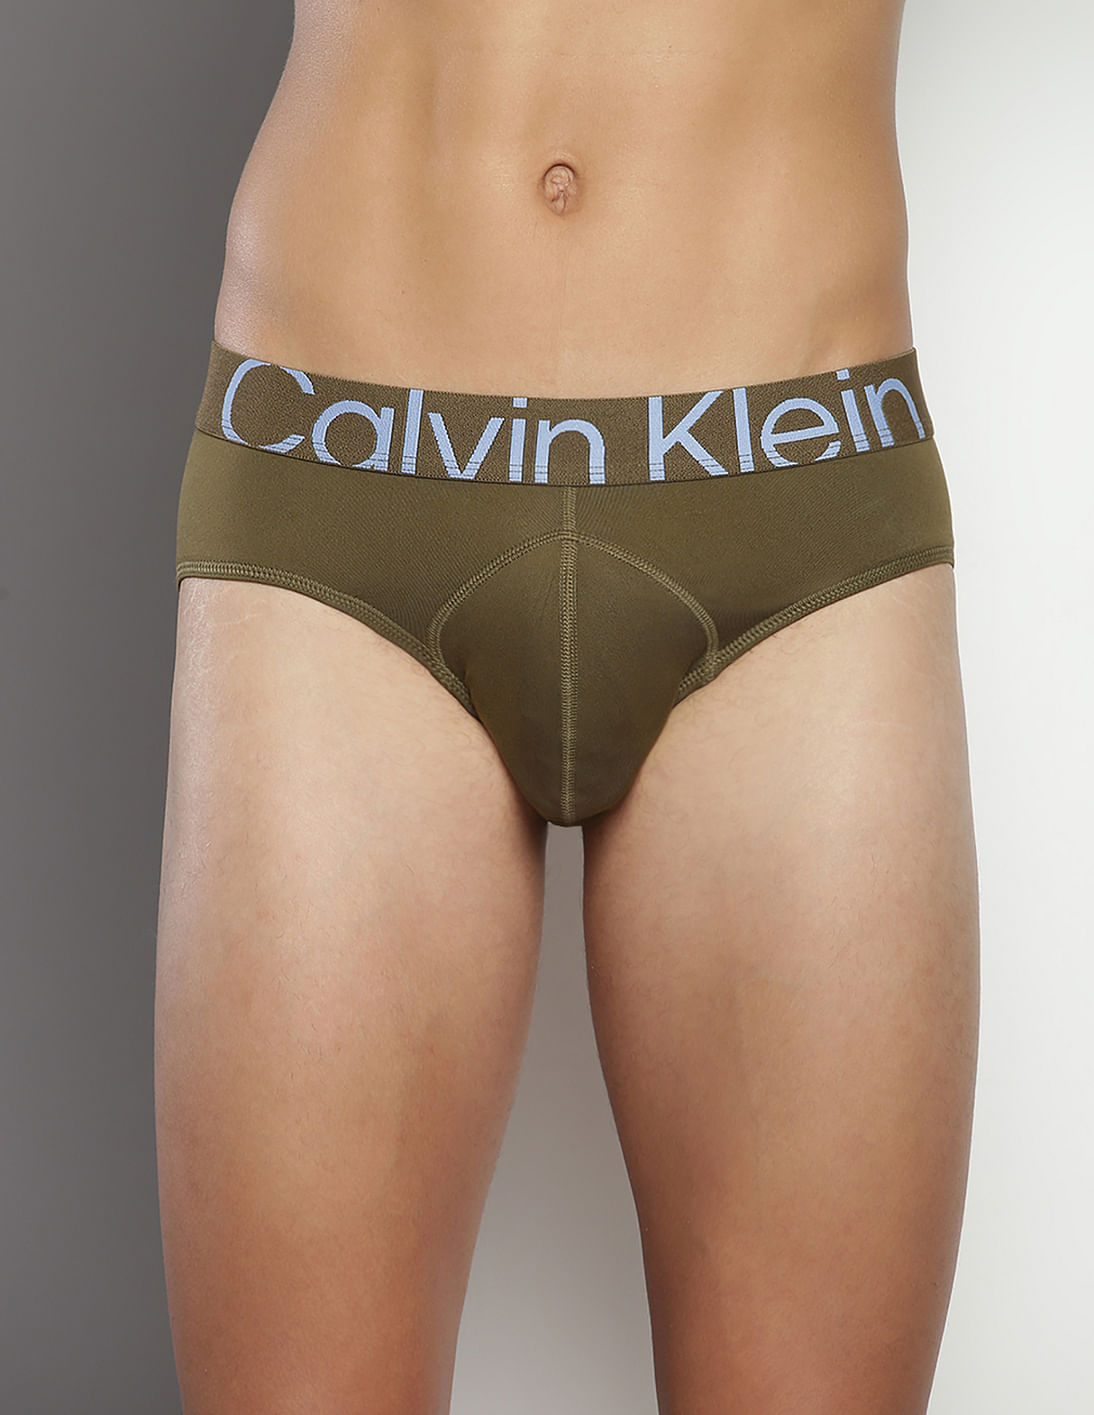 The Brand Loyalty with Calvin Klein  Ck Permanent Underwear tatoo  #techburner #technologygyan 